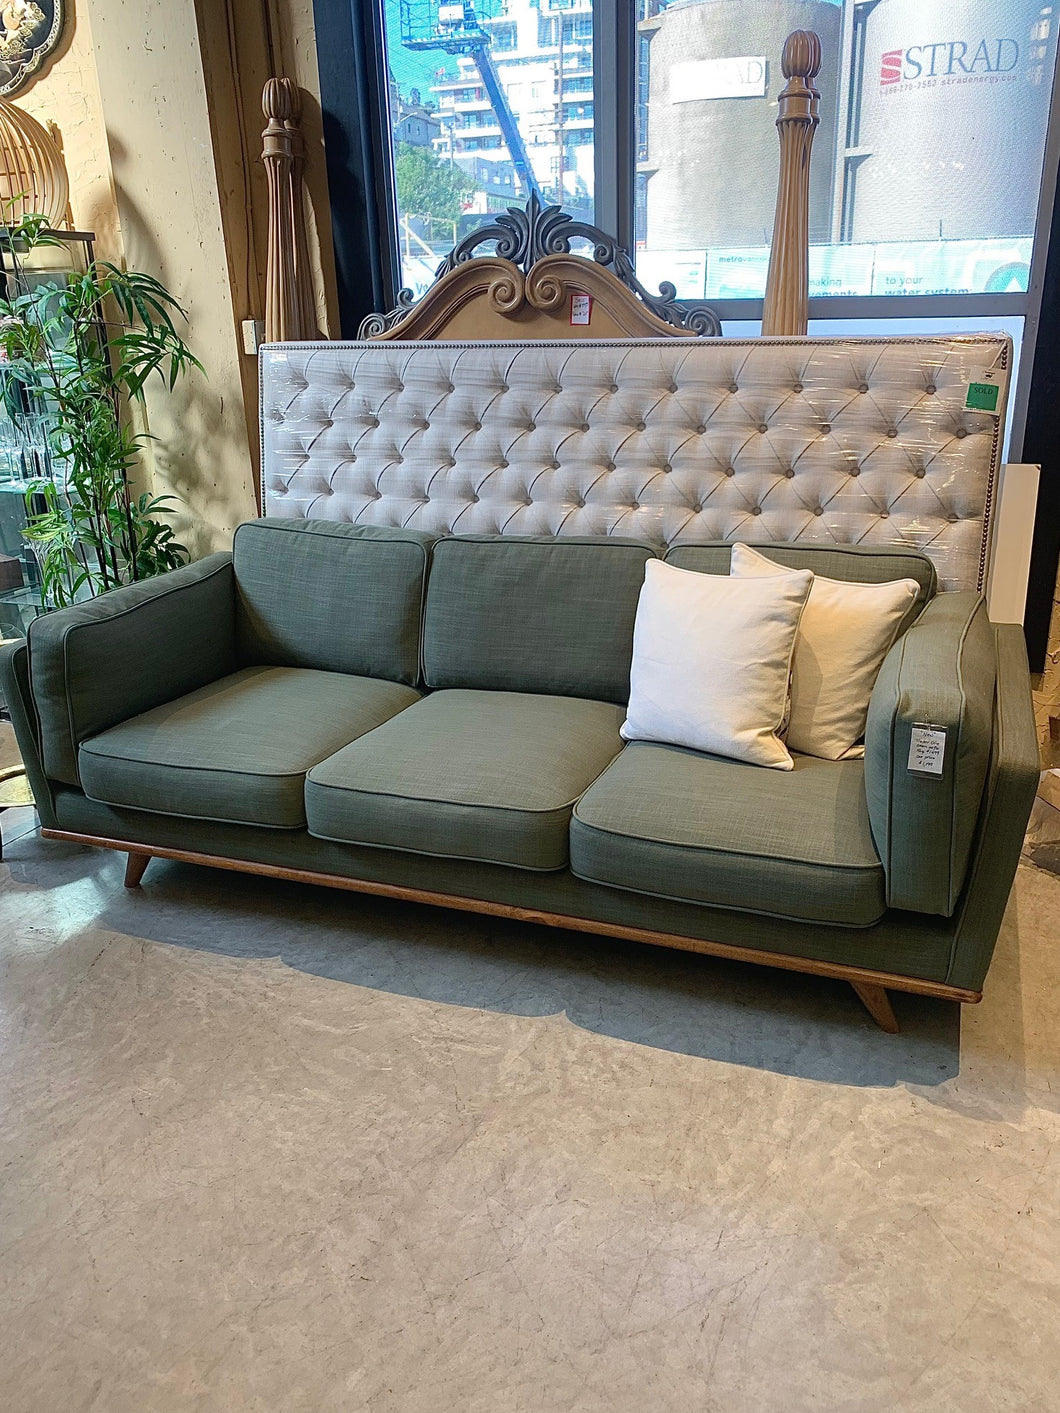 New MCM styled green sofa